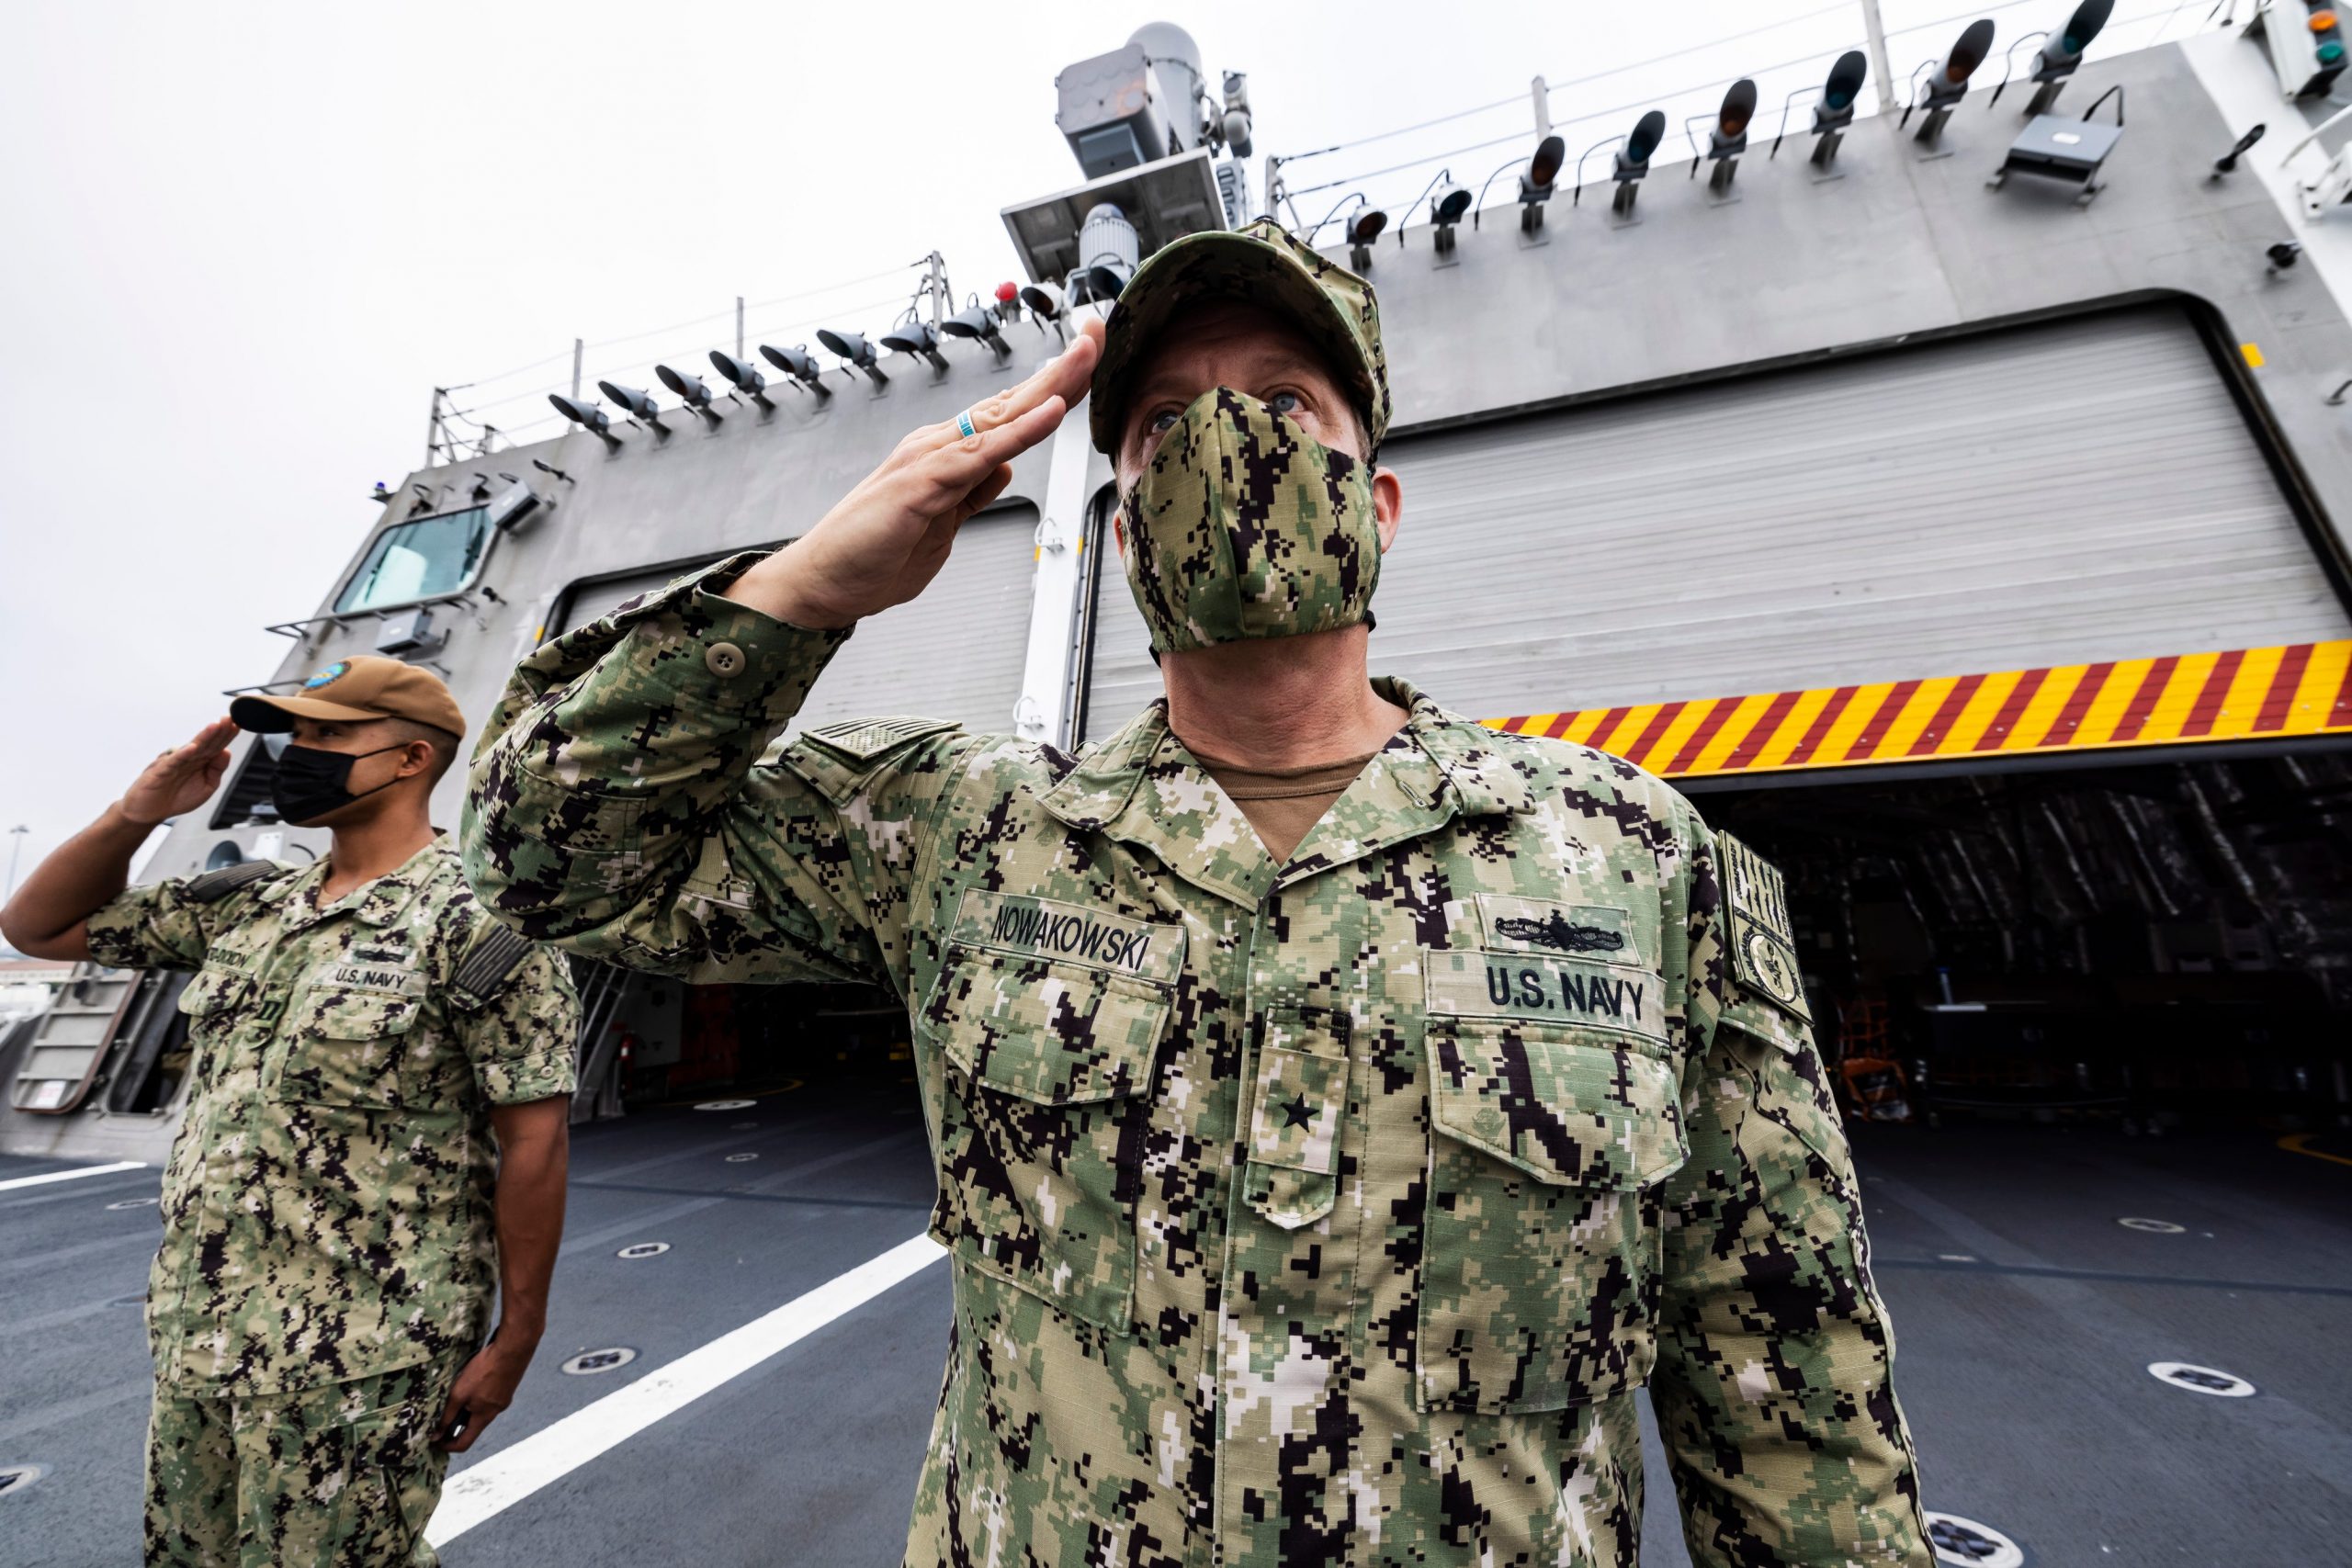 Two men in uniform are seen saluting